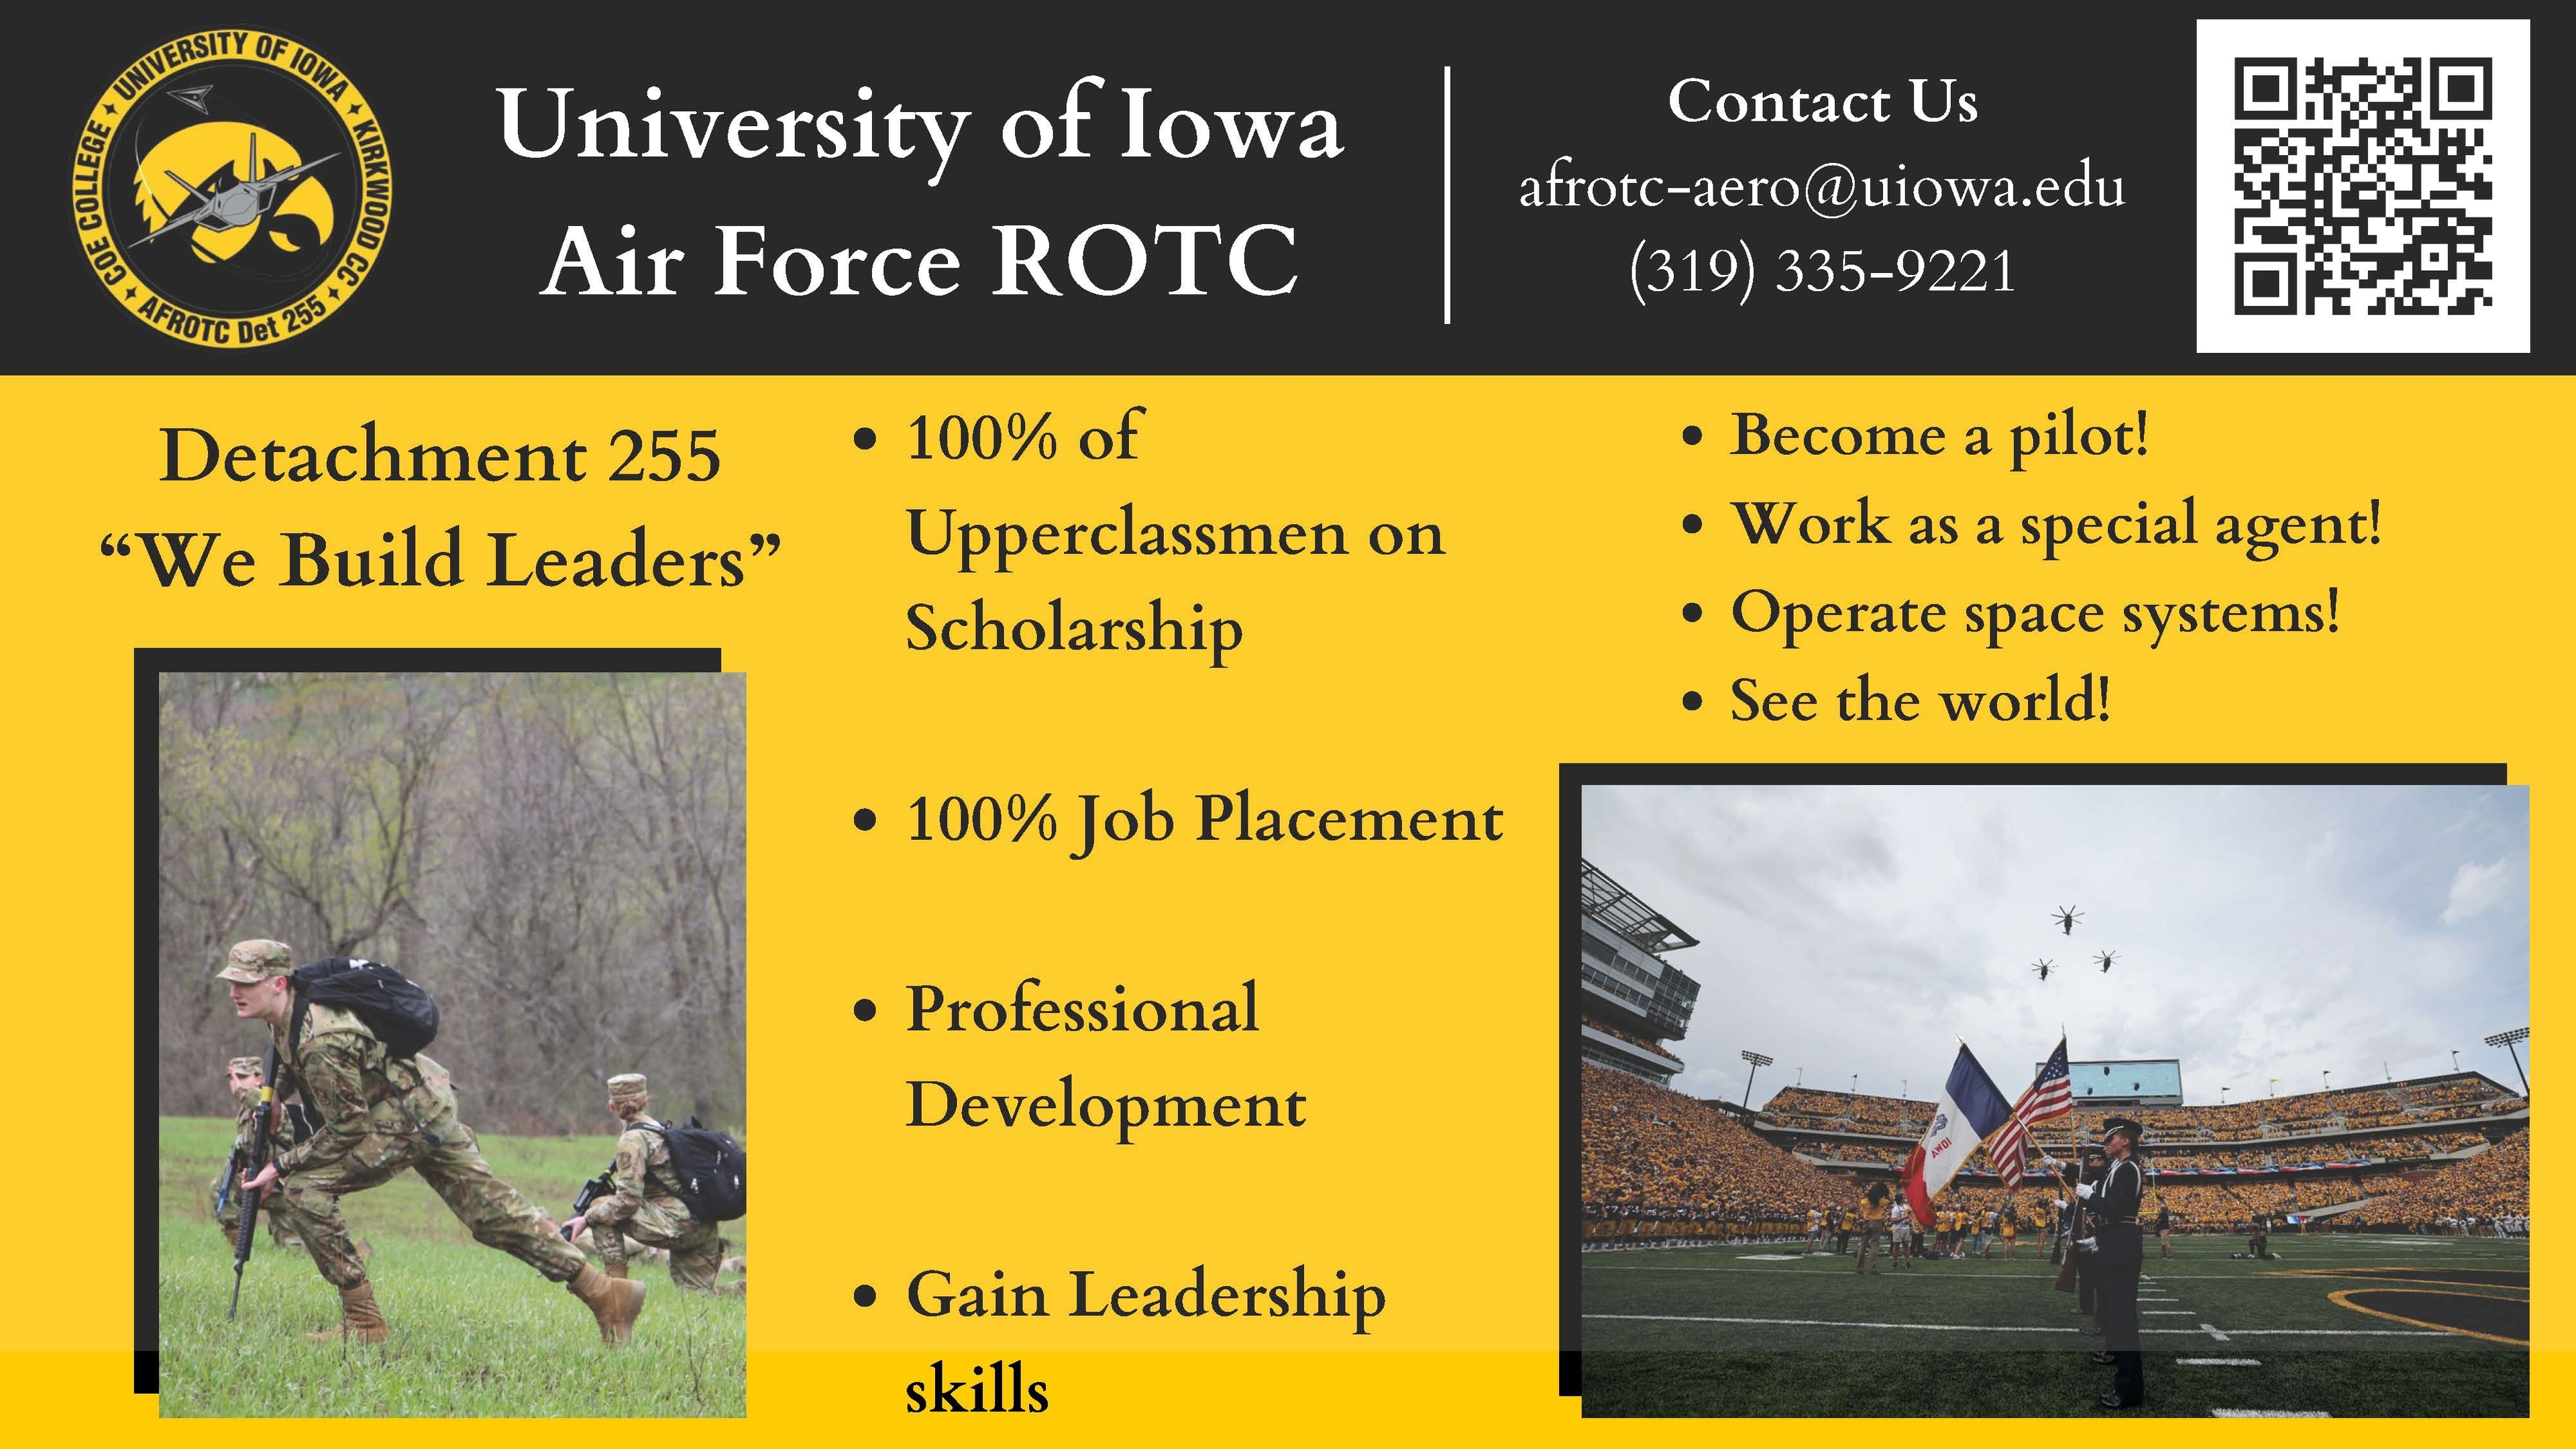 University of Iowa Air Force ROTC - Contact us: afrotc-aero@uiowa.edu